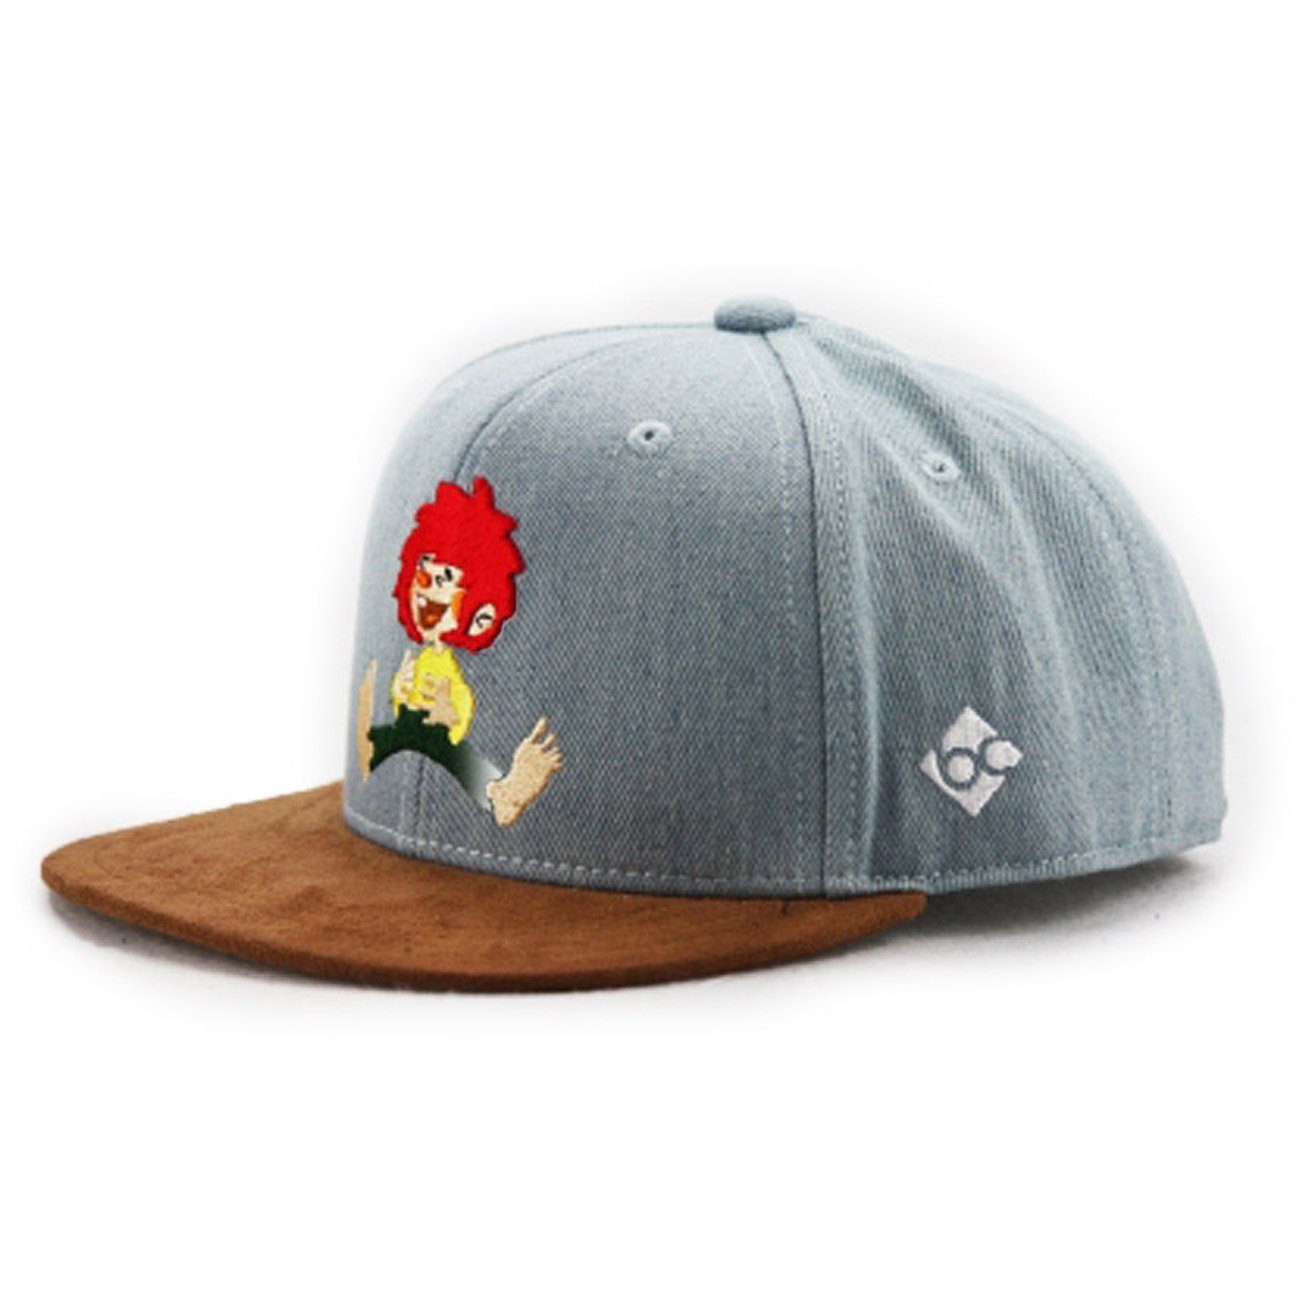 Bavarian Caps Baseball Cap Pumuckl